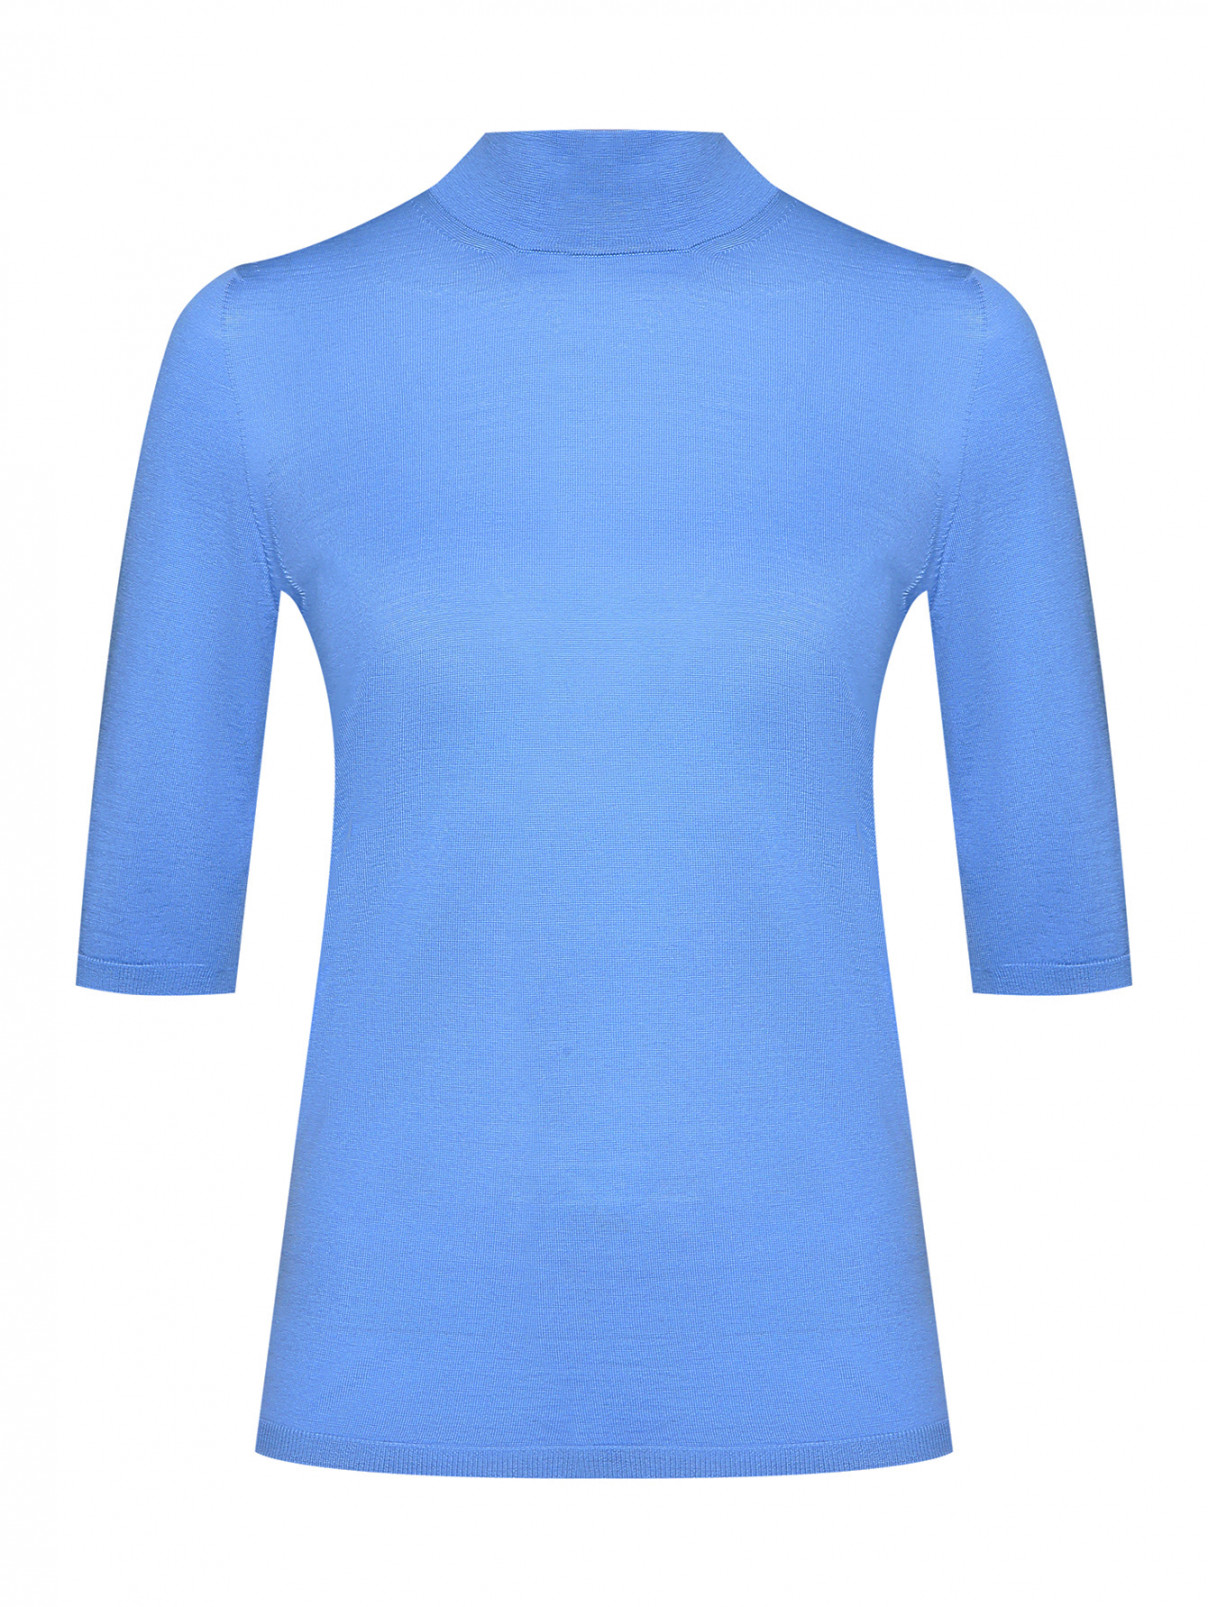 Джемпер из шерсти с короткими рукавами Max Mara  –  Общий вид  – Цвет:  Синий